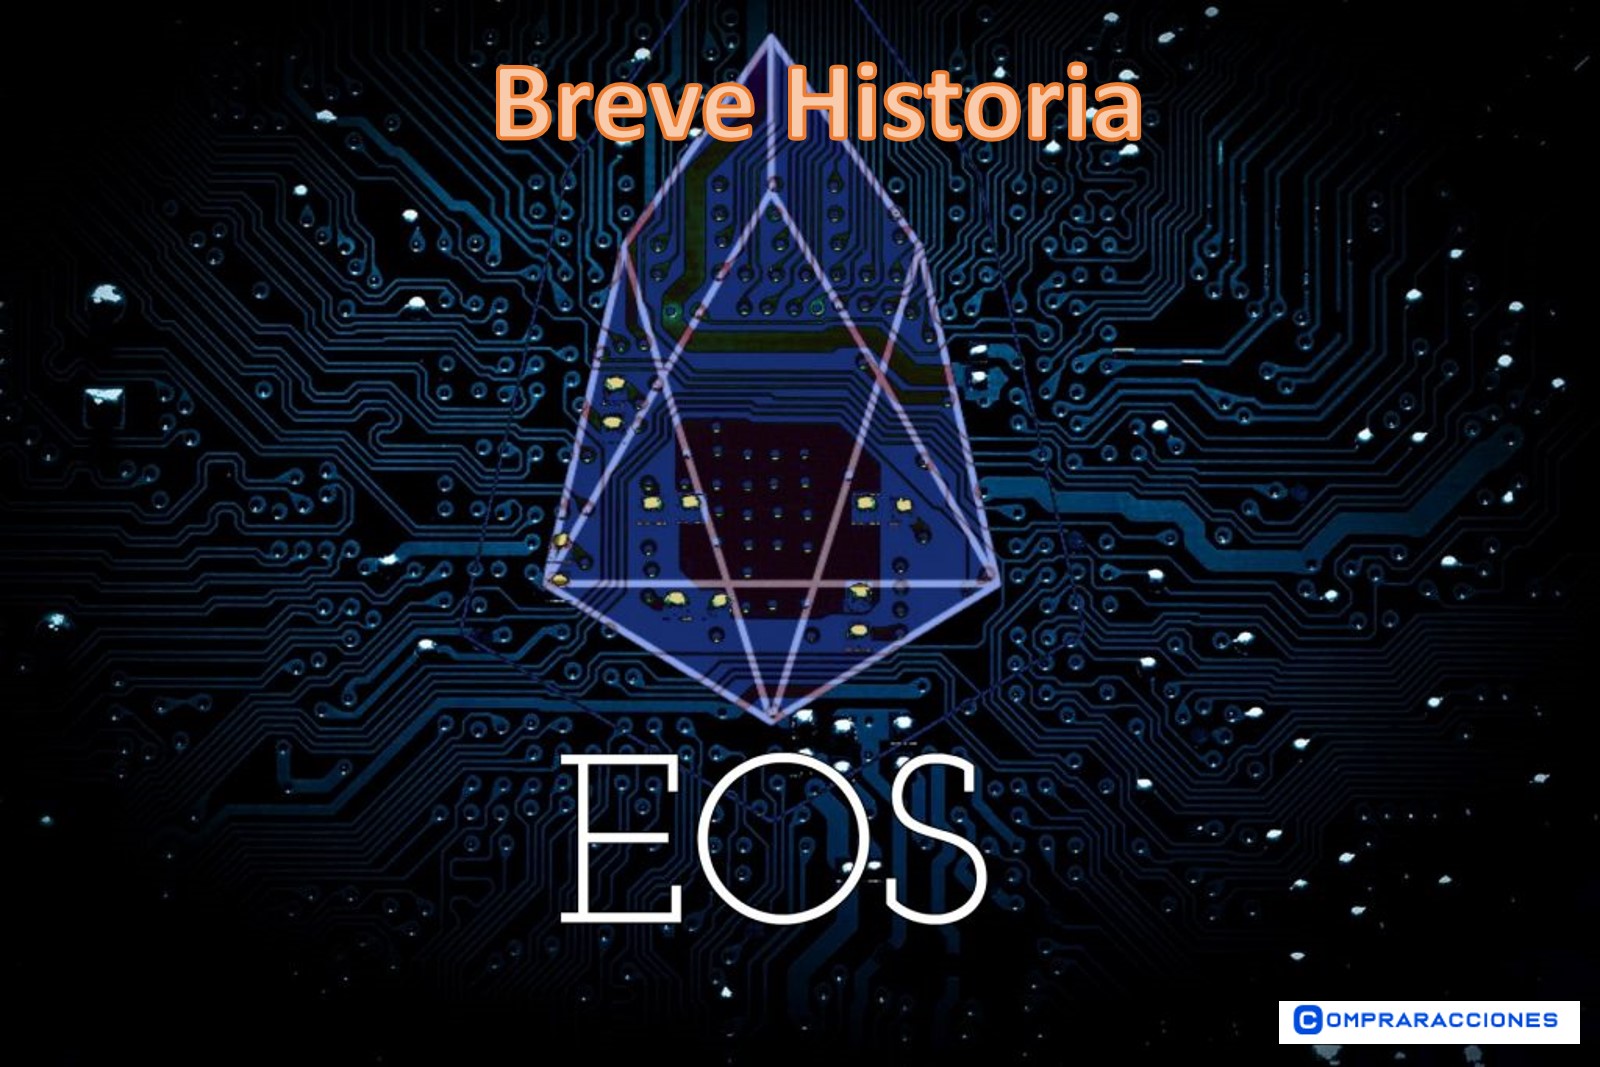 Breve Historia de EOS